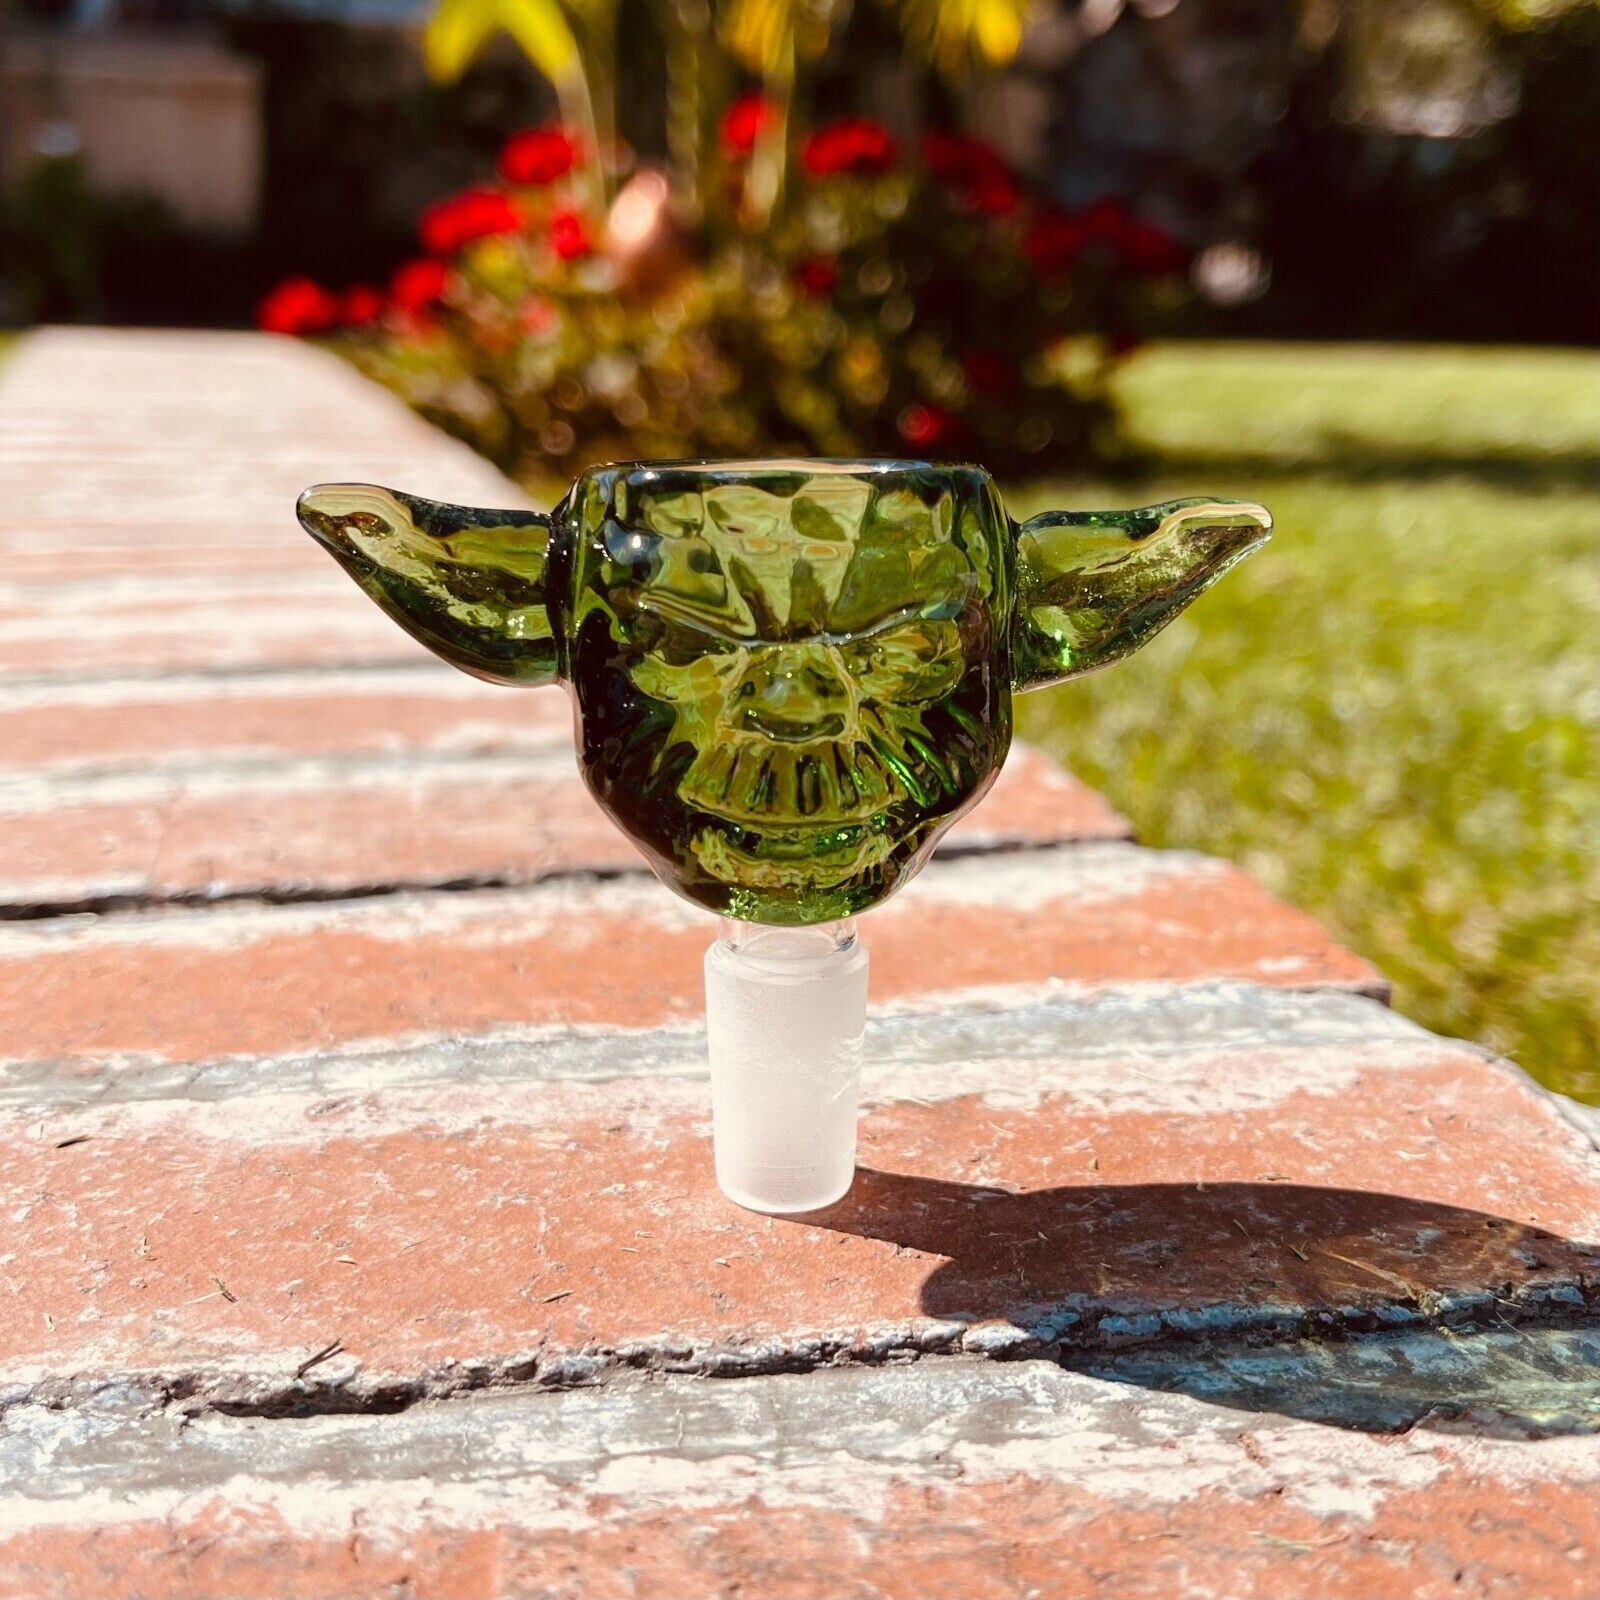 Primium 14mm-Thick Glass Yoda Bowl Head Holder